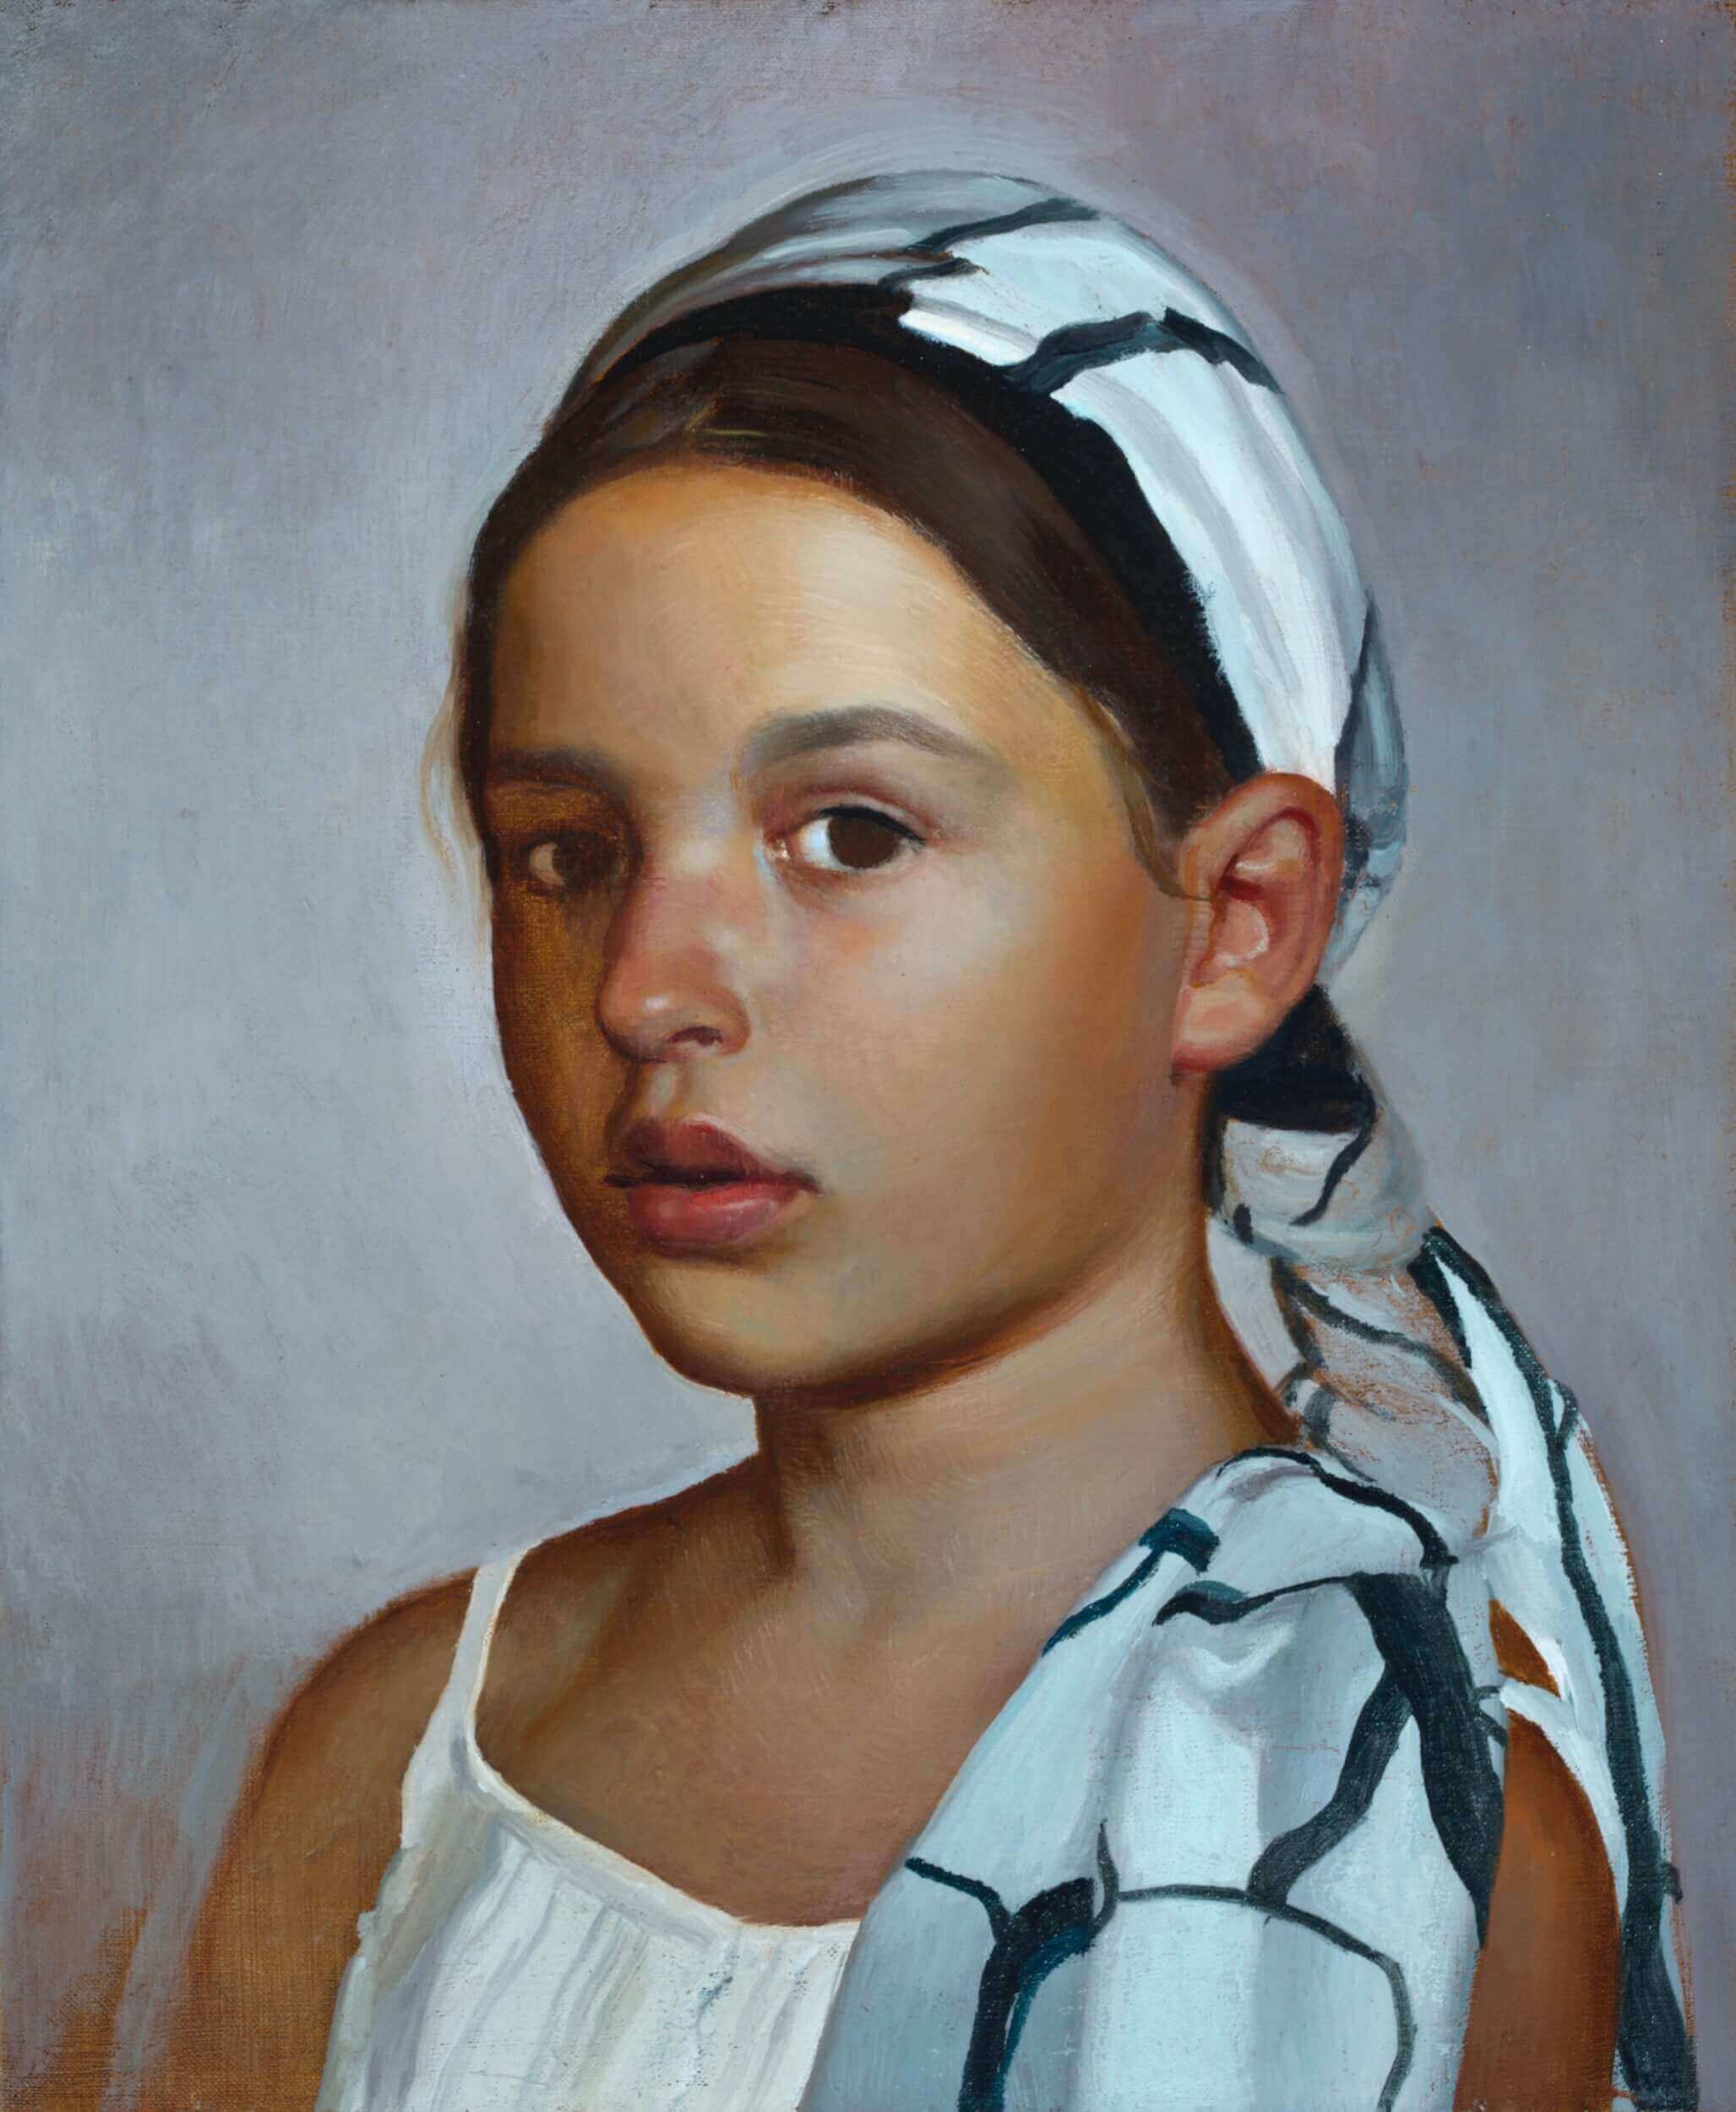 Noah Buchanan, Between the Distance, 12 x 10, oil on canvas (courtesy of Dacia Gallery)